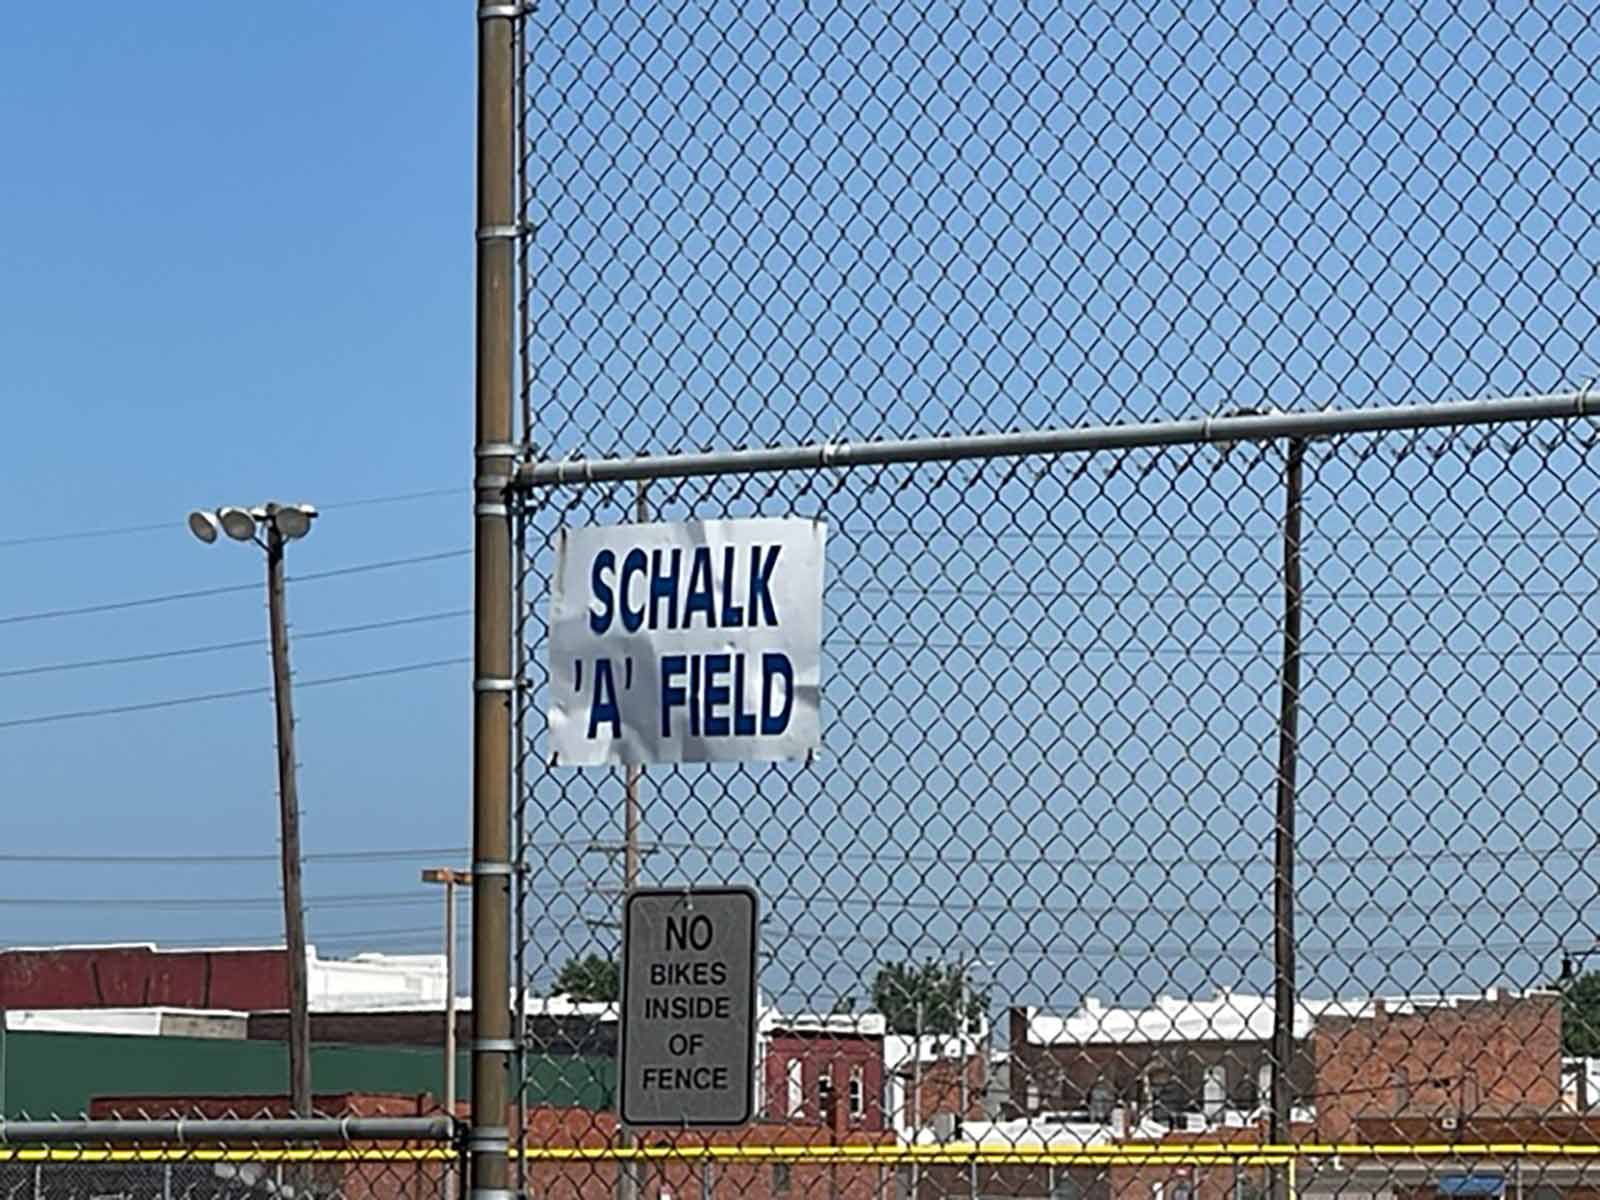 Schalk A Field sign on fence